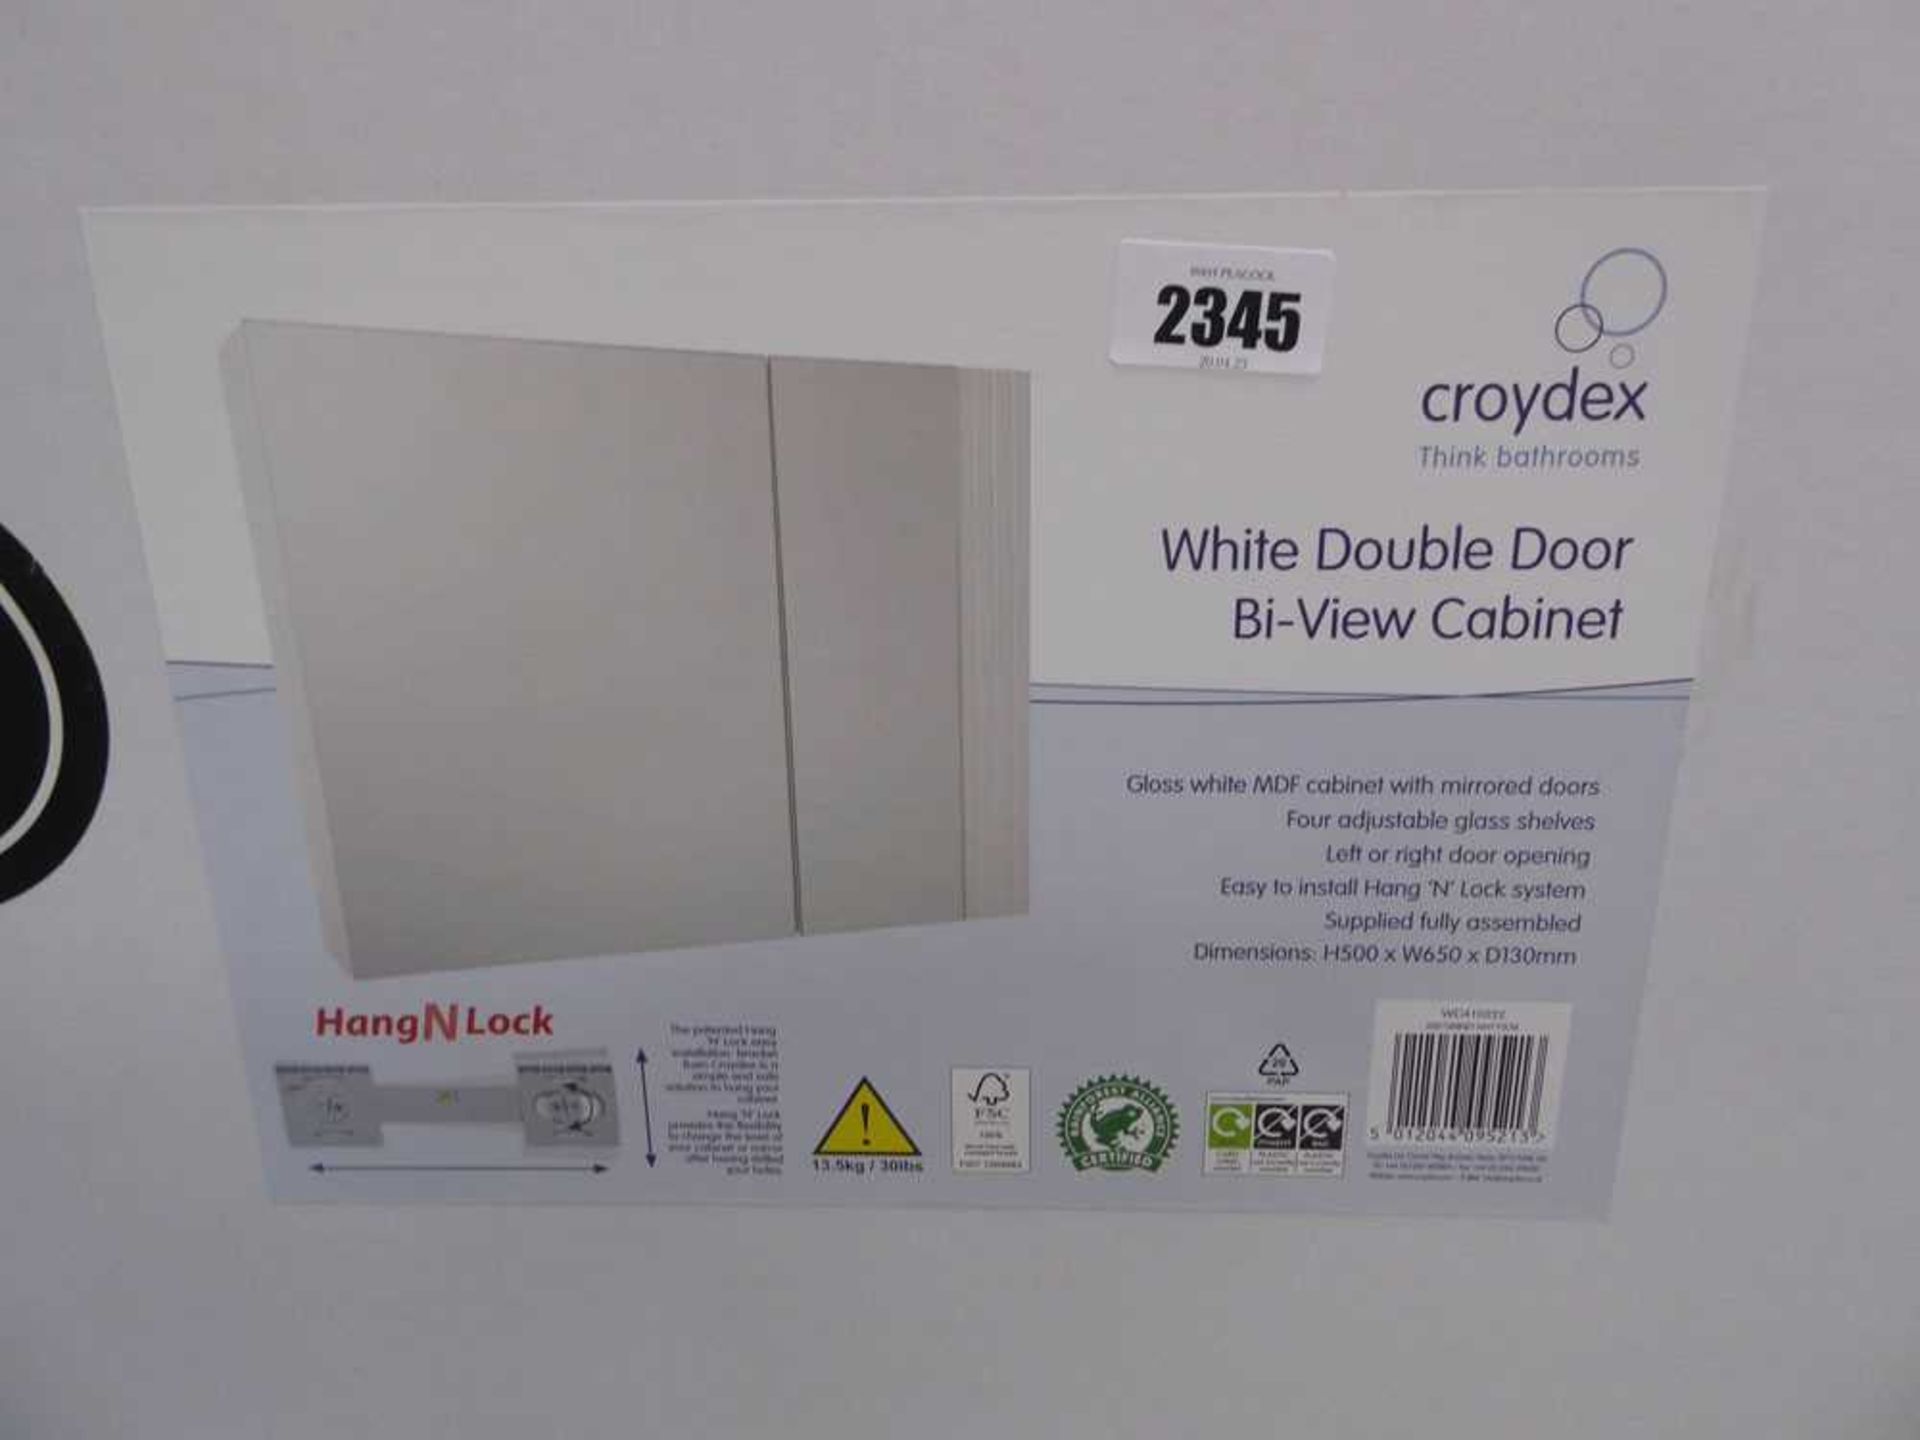 Boxed Croydex white double door bathroom cabinet - Image 2 of 2